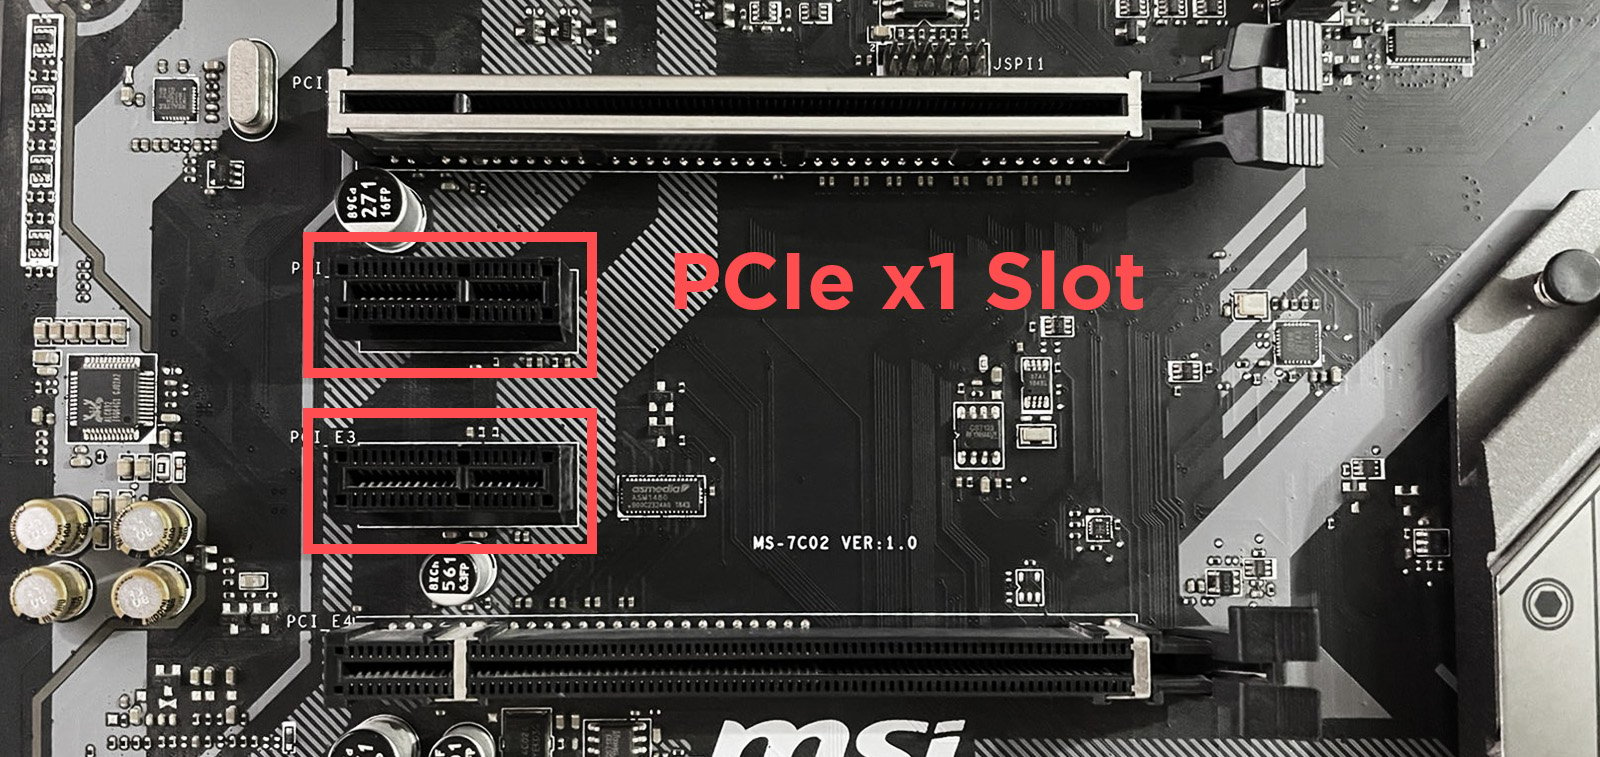 PCIe x1 Slot